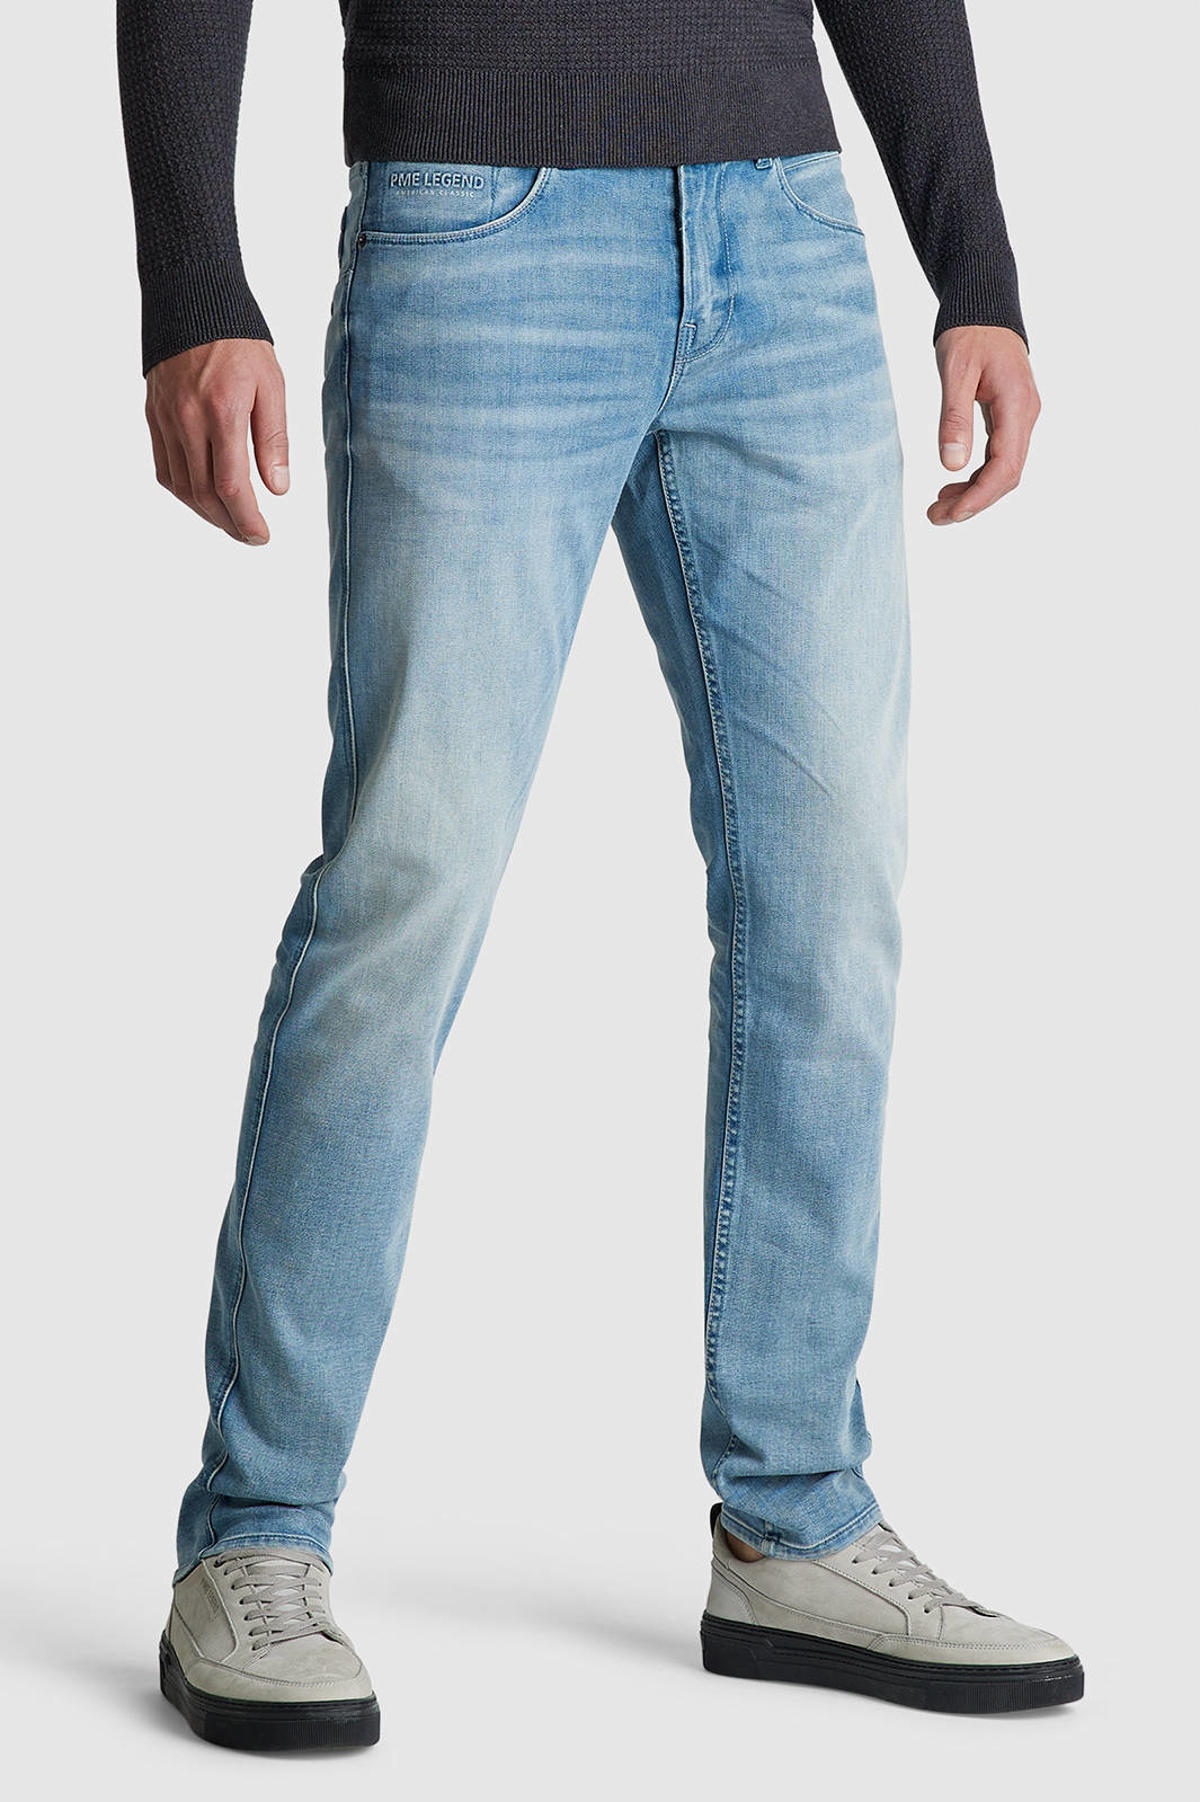 Staat Bij Nevelig PME Legend straight fit jeans Nightflight bright comfort light | wehkamp